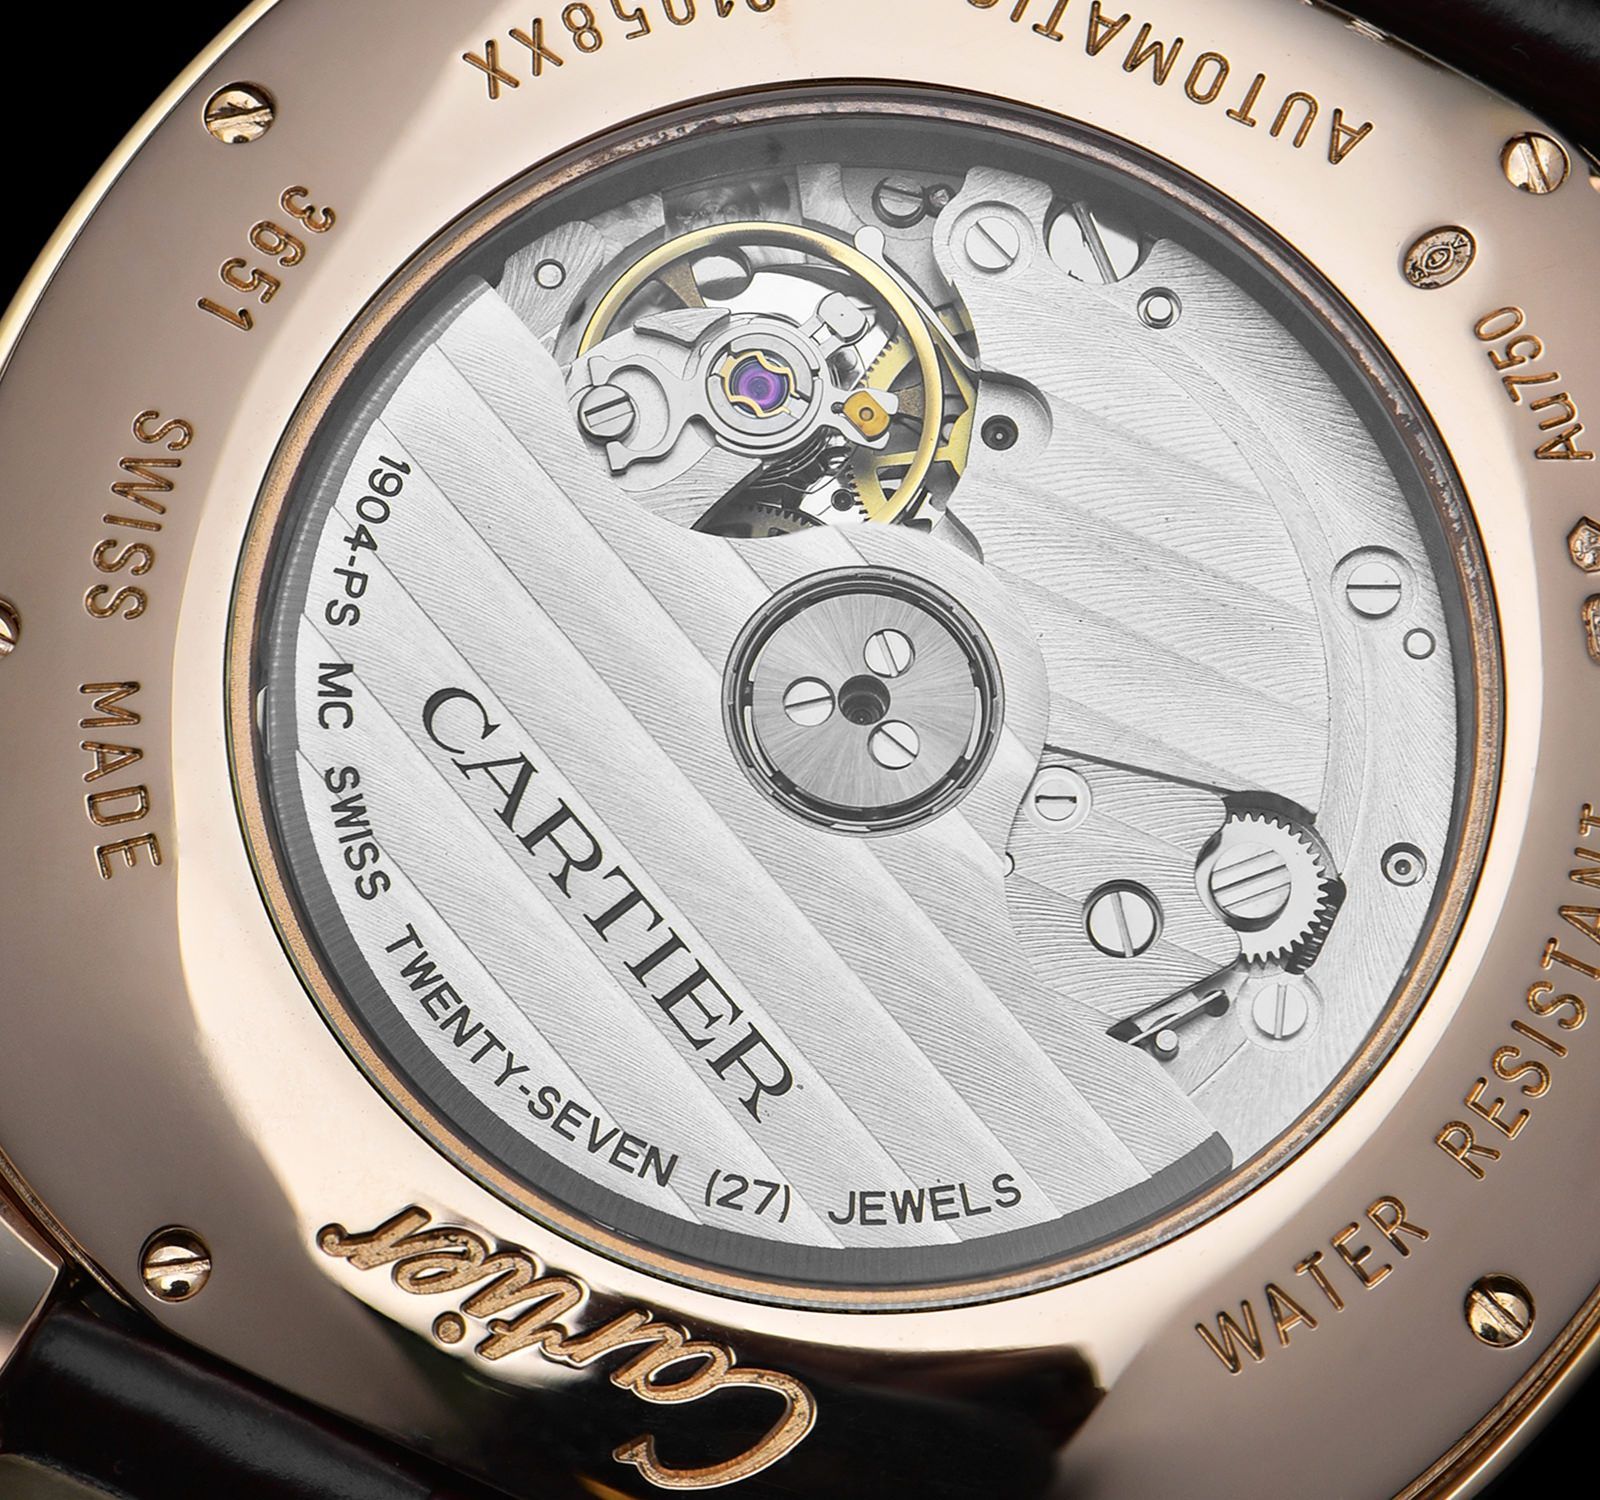 Cartier watches for Men